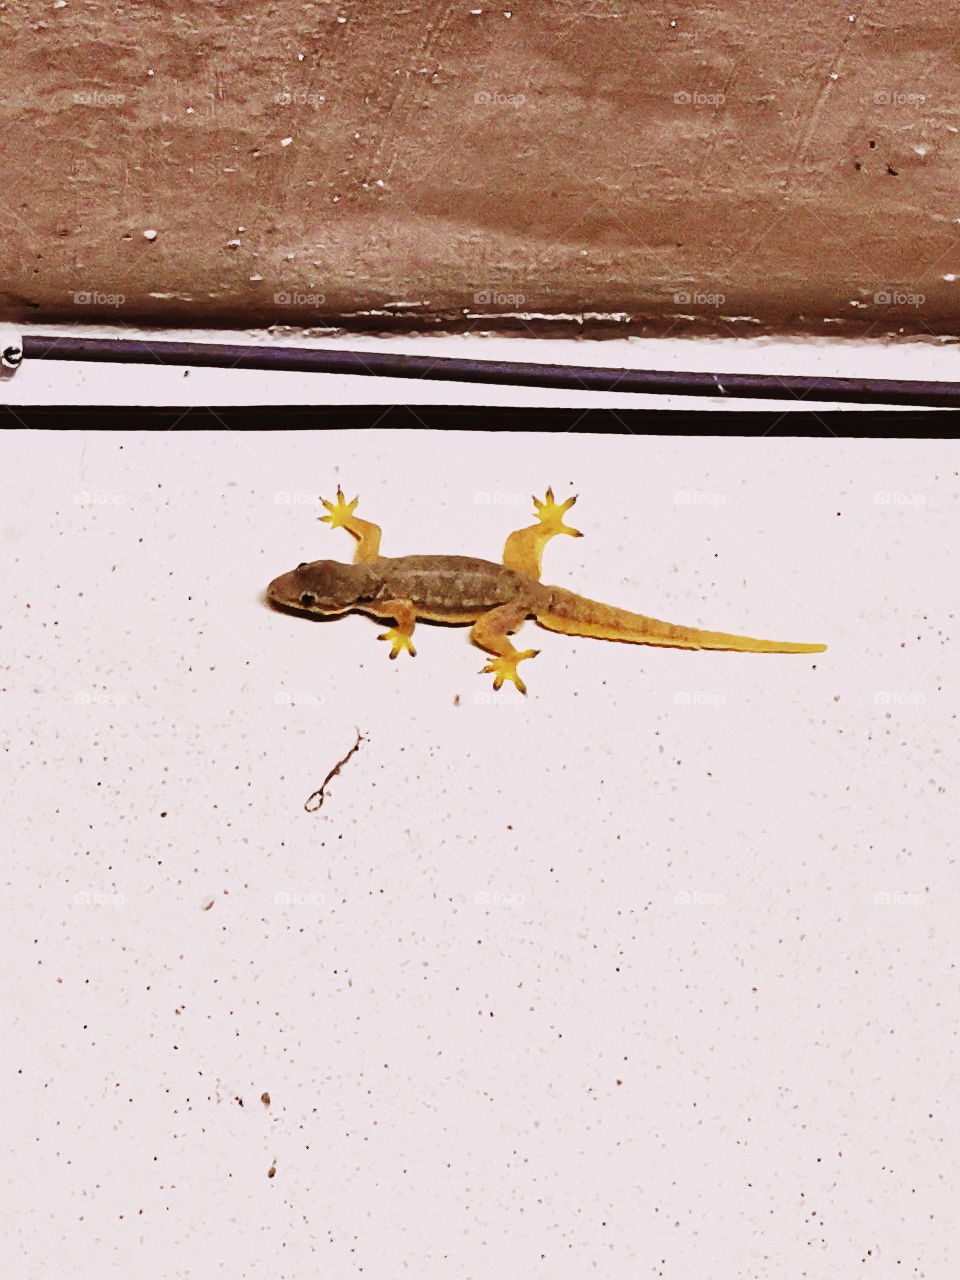 Home lizard taken by Huawei p30 pro with 10x zoom